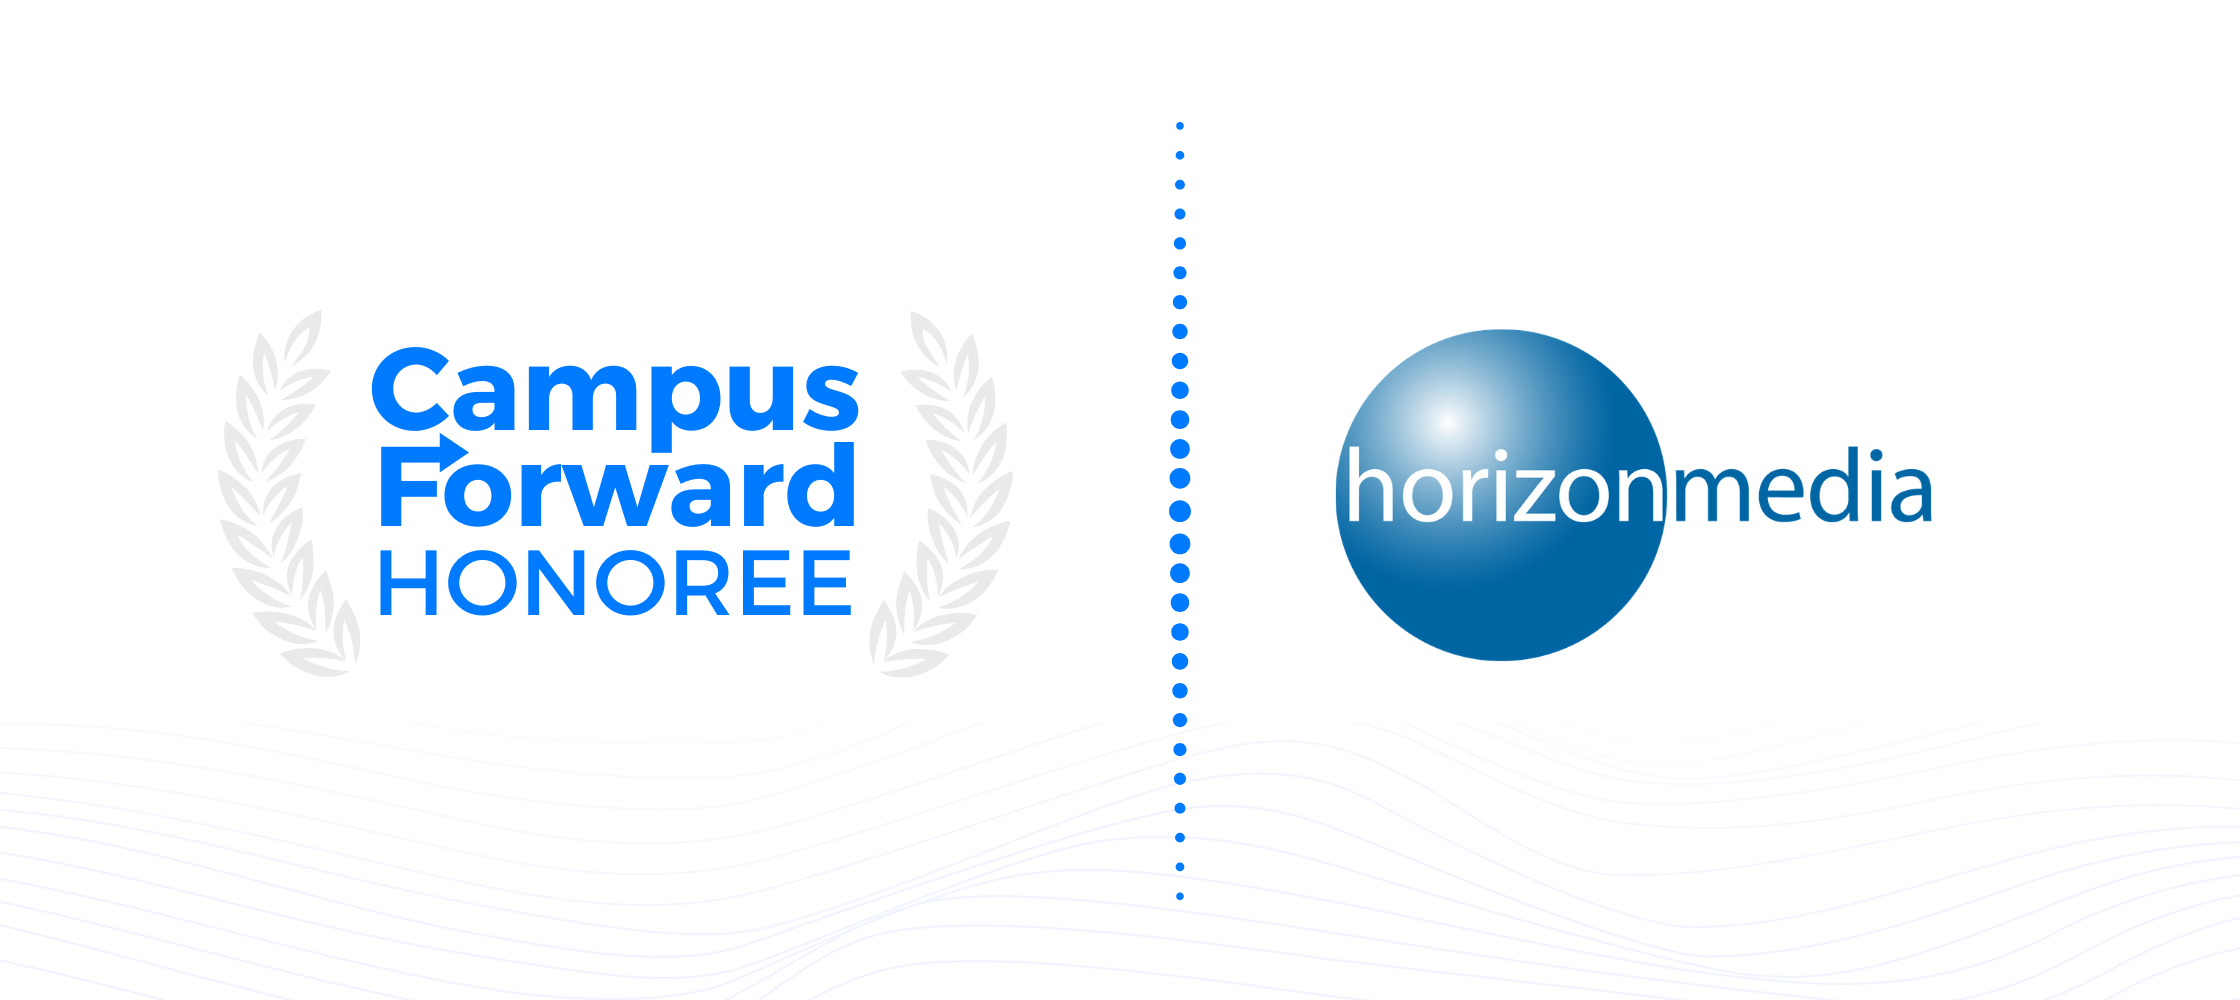 Campus Forward Honoree - Horizon Media